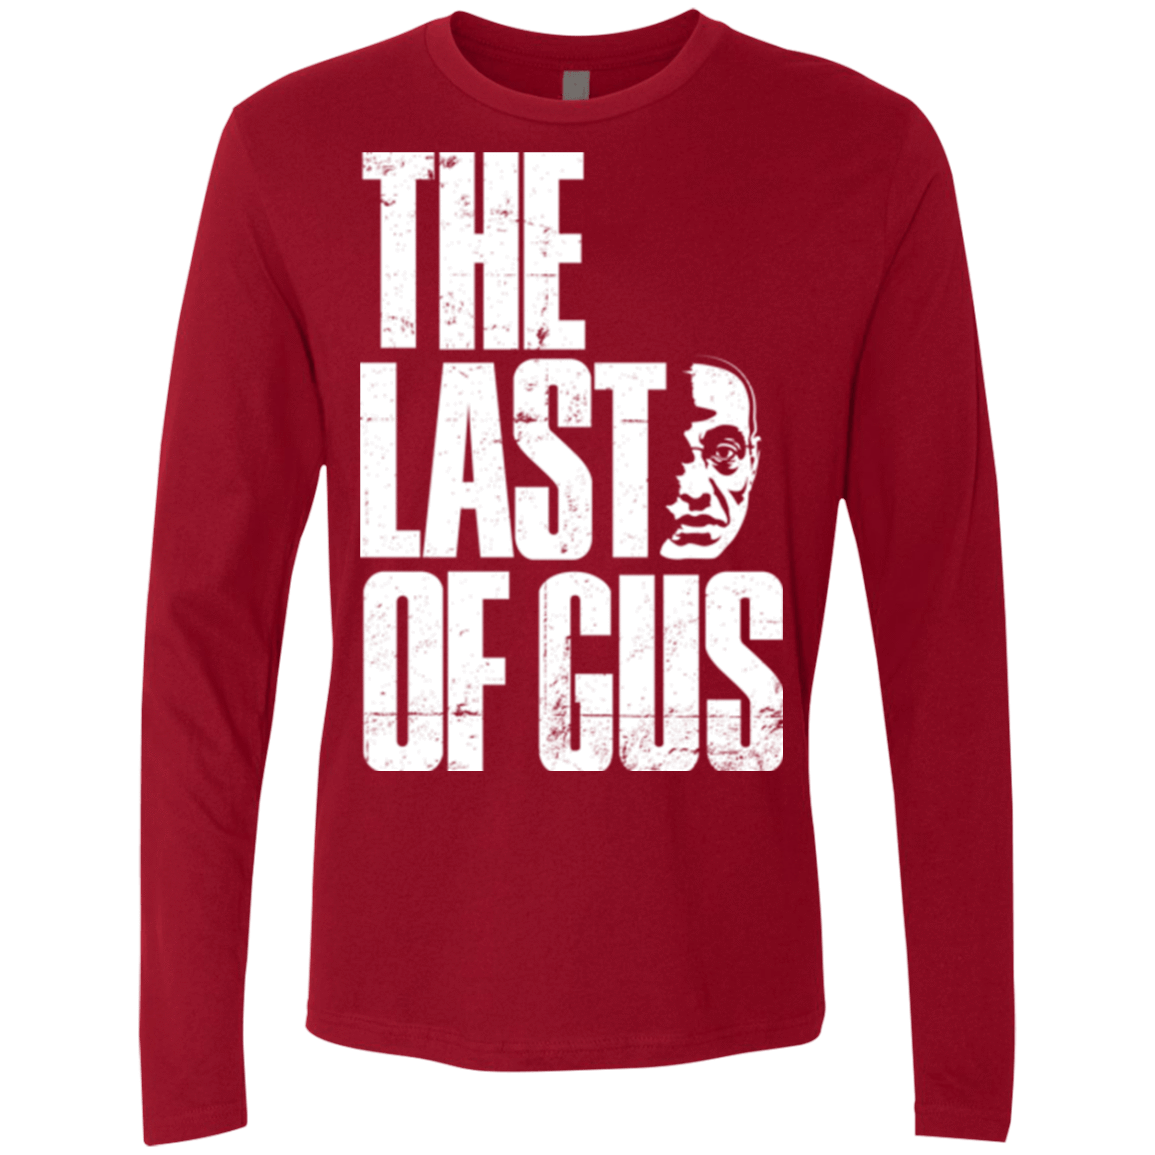 T-Shirts Cardinal / Small Last of Gus Men's Premium Long Sleeve